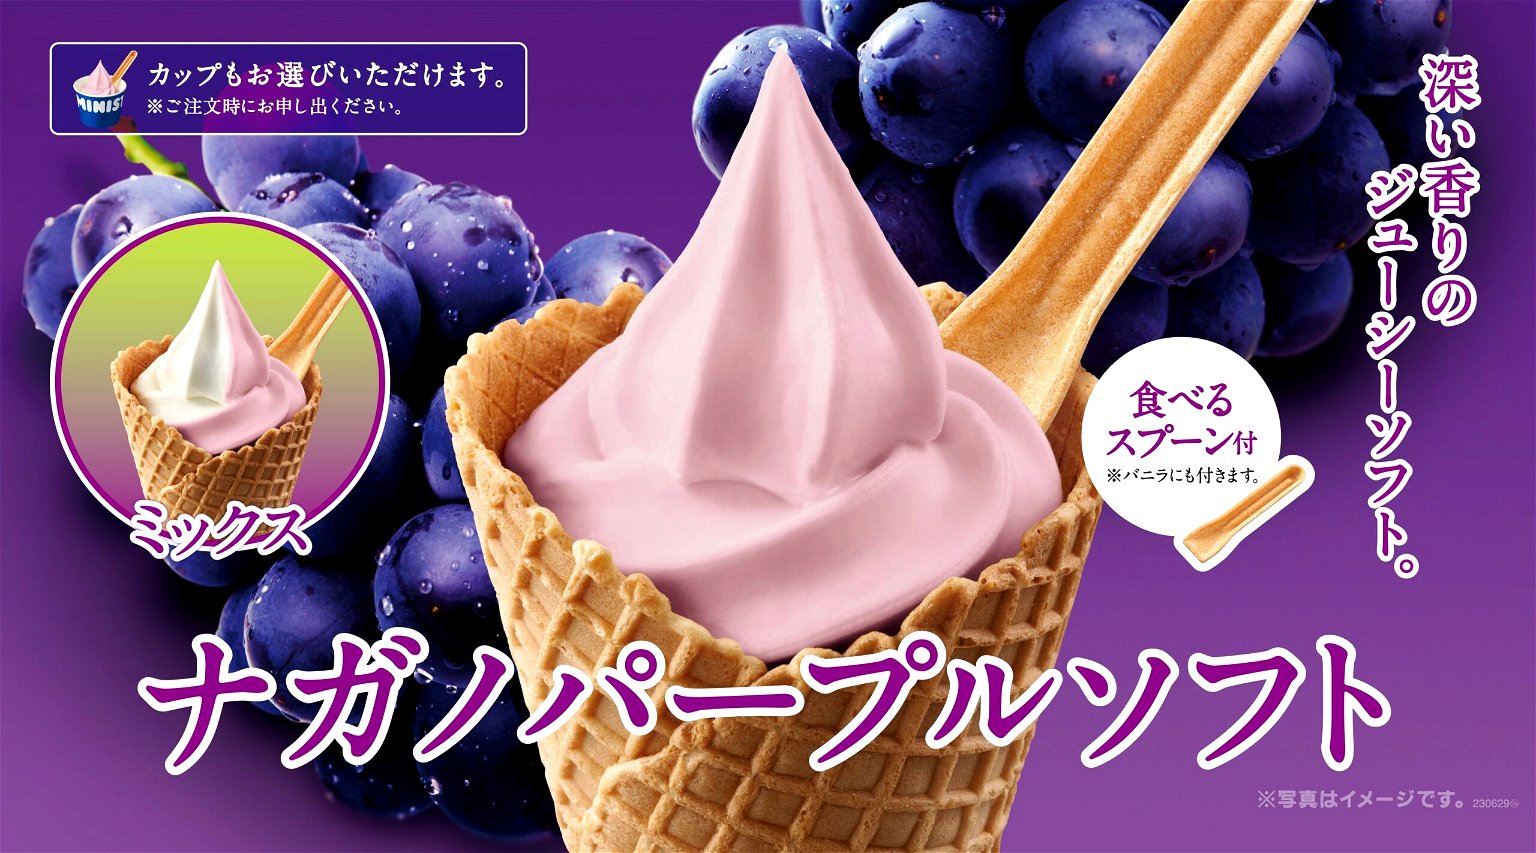 Nagano Purple ice cream